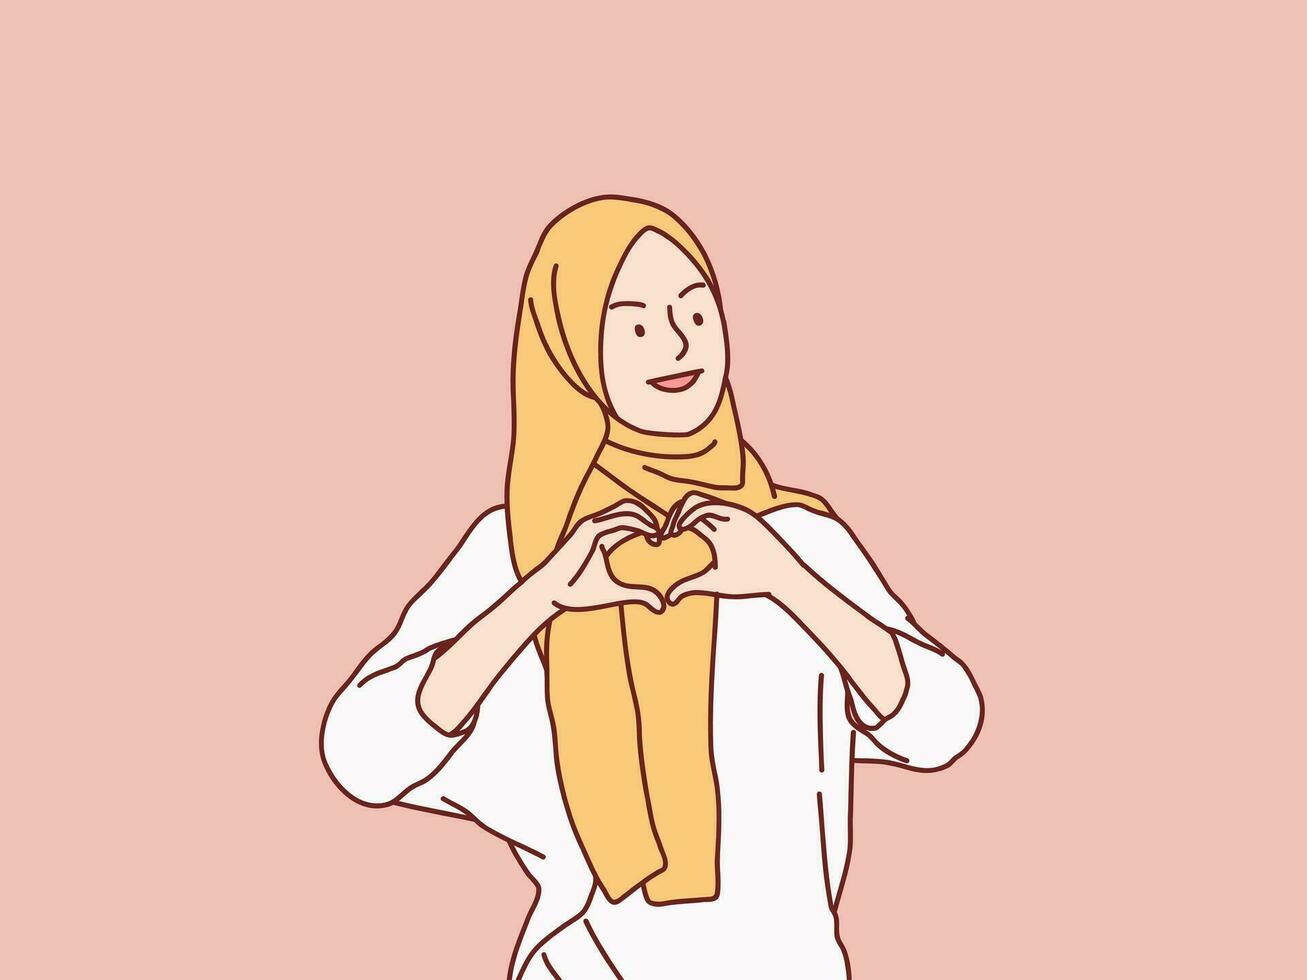 Woman muslim hijab feeling happy and romantic shape heart love gesture simple korean style illustration vector